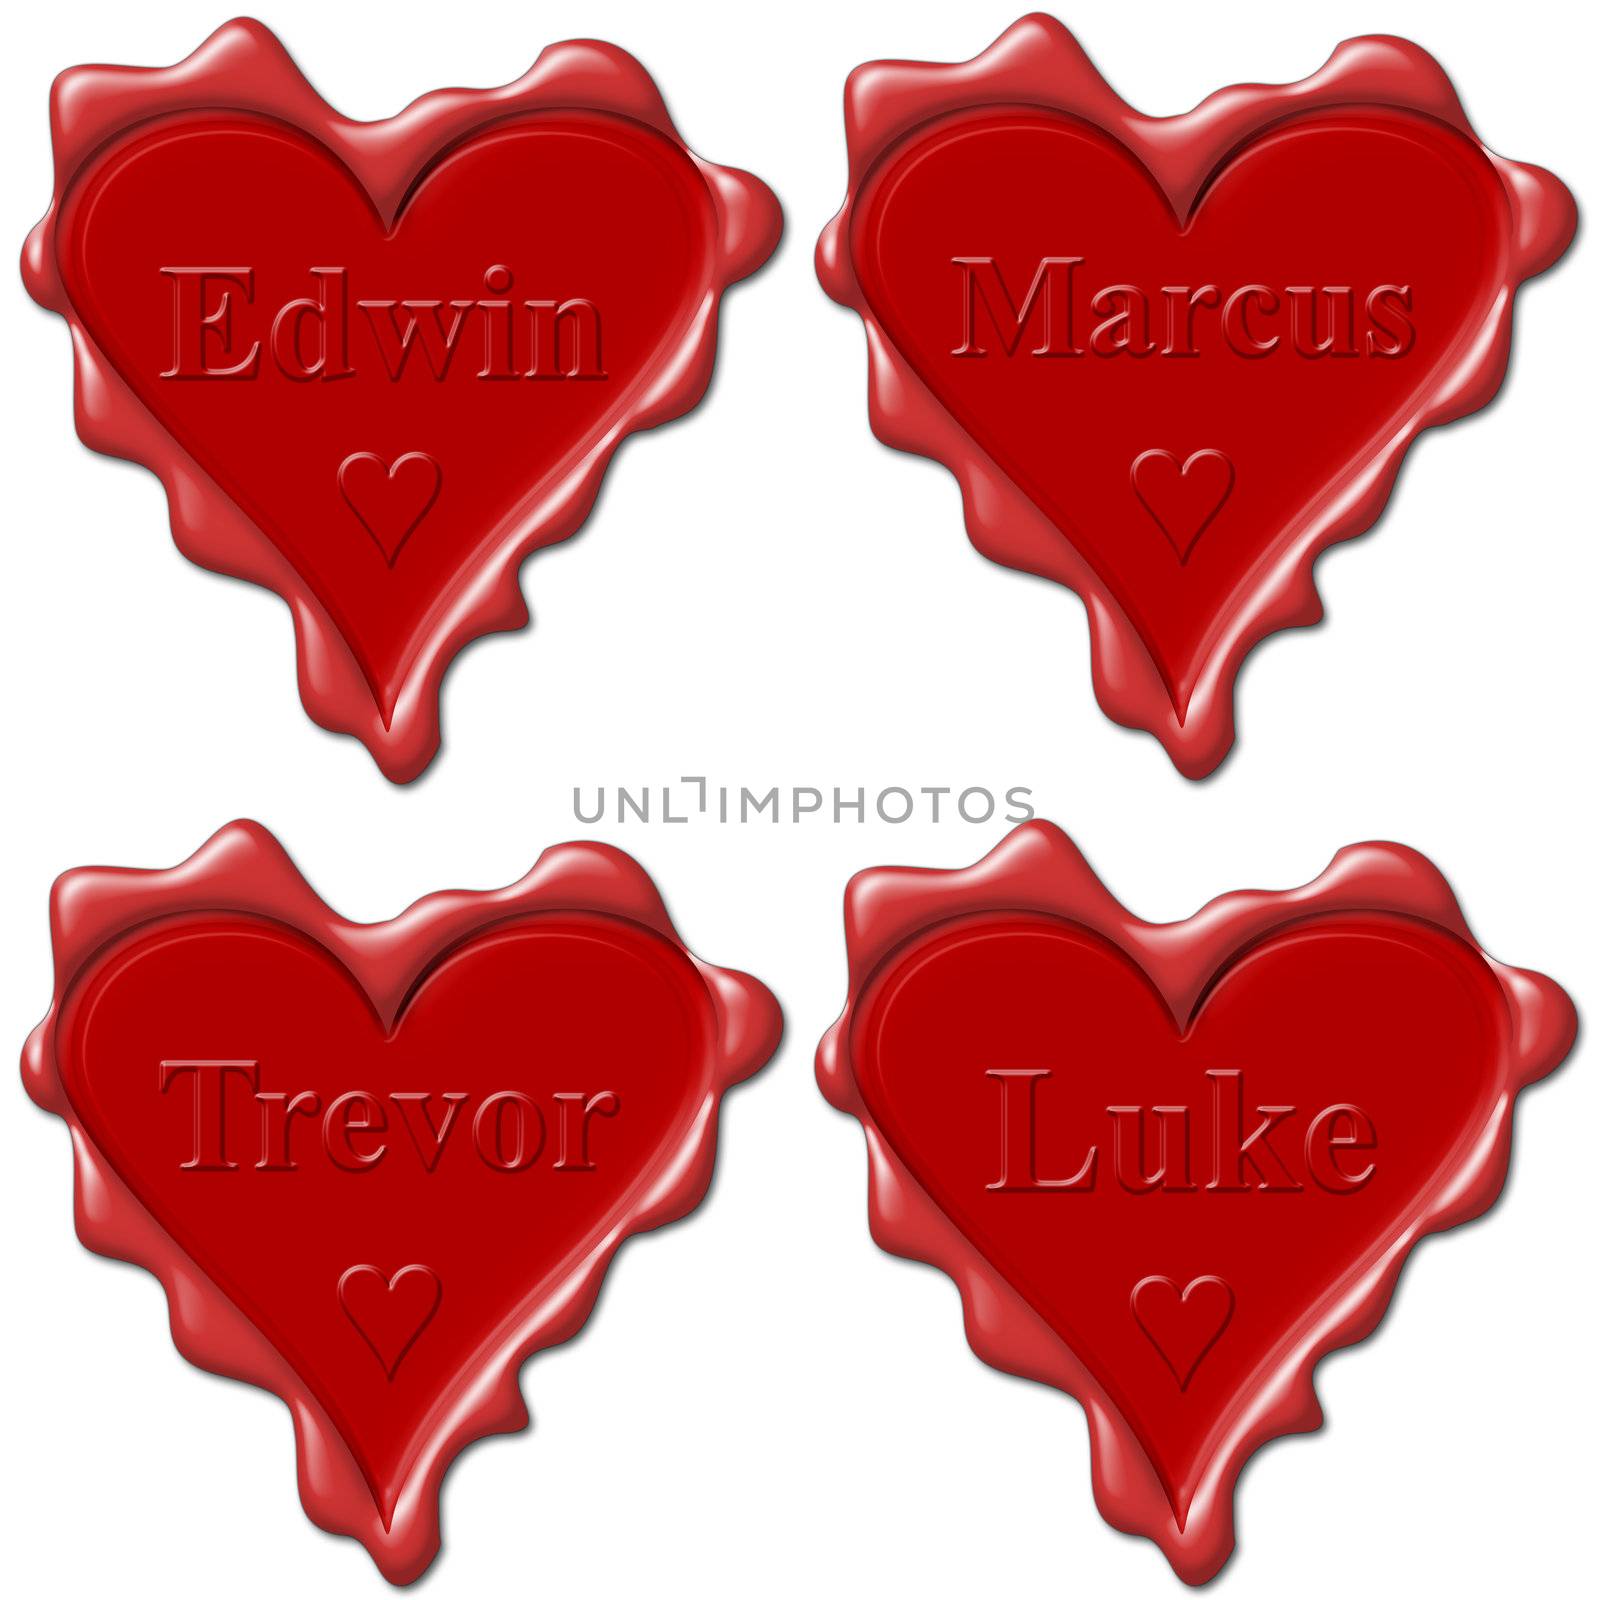 Valentine love hearts with names: Edwin, Marcus, Trevor, Luke